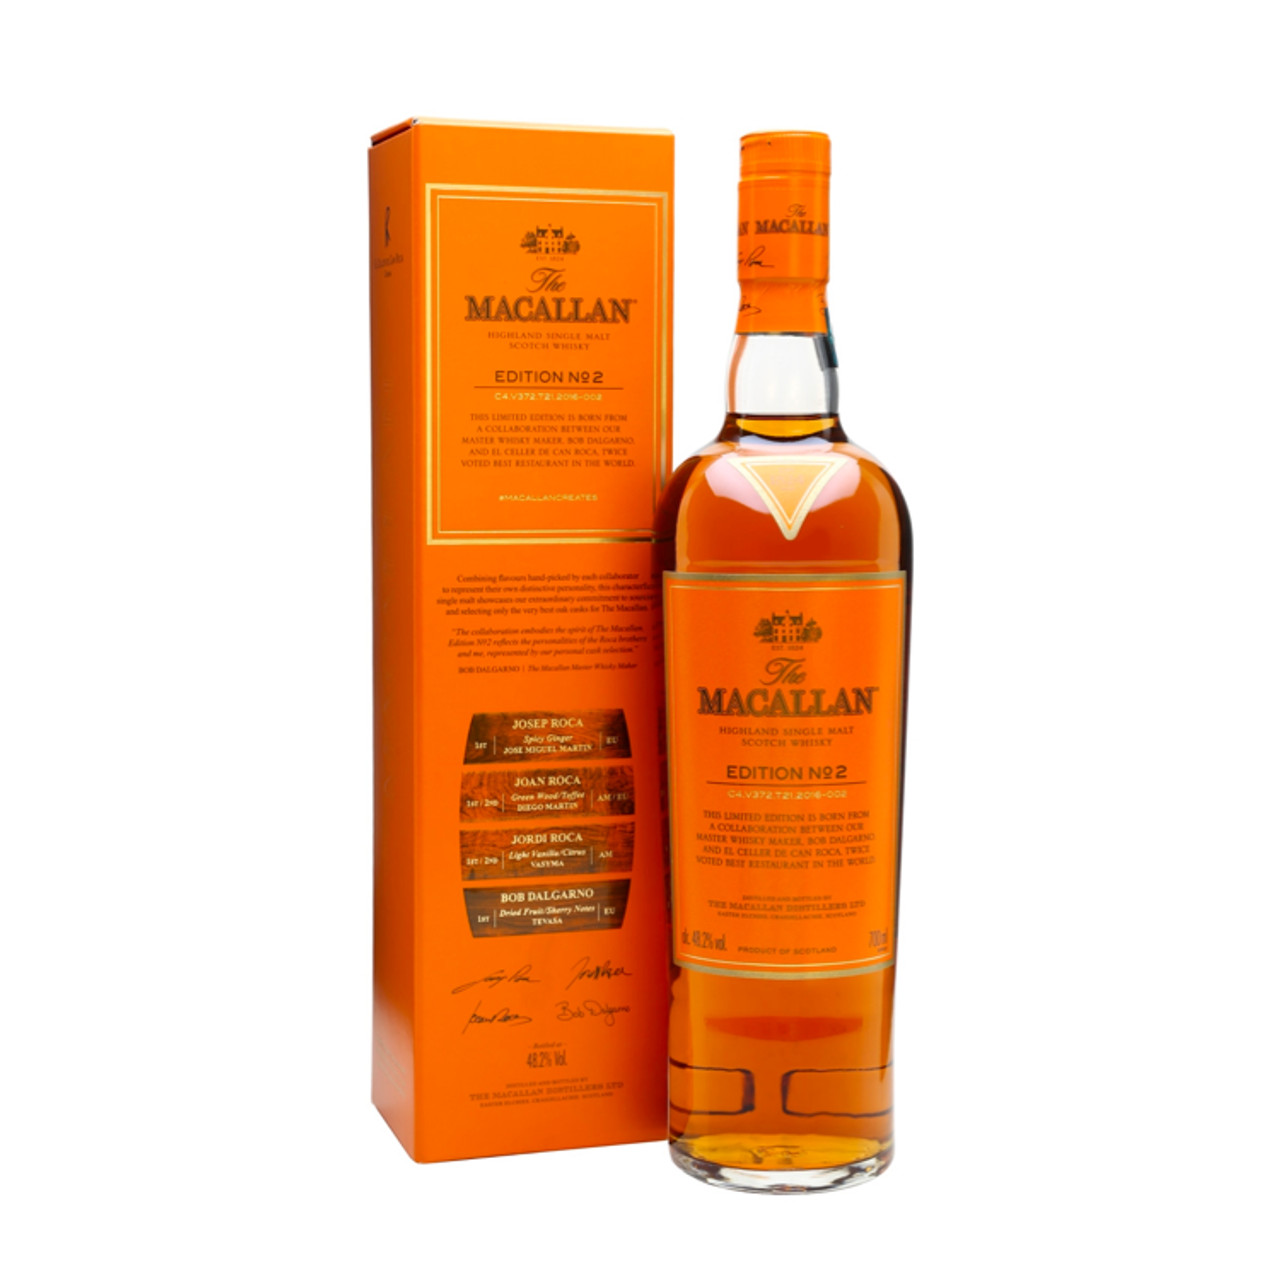 The Macallan Edition No. 2 Single Malt Scotch Whisky (750 ML)